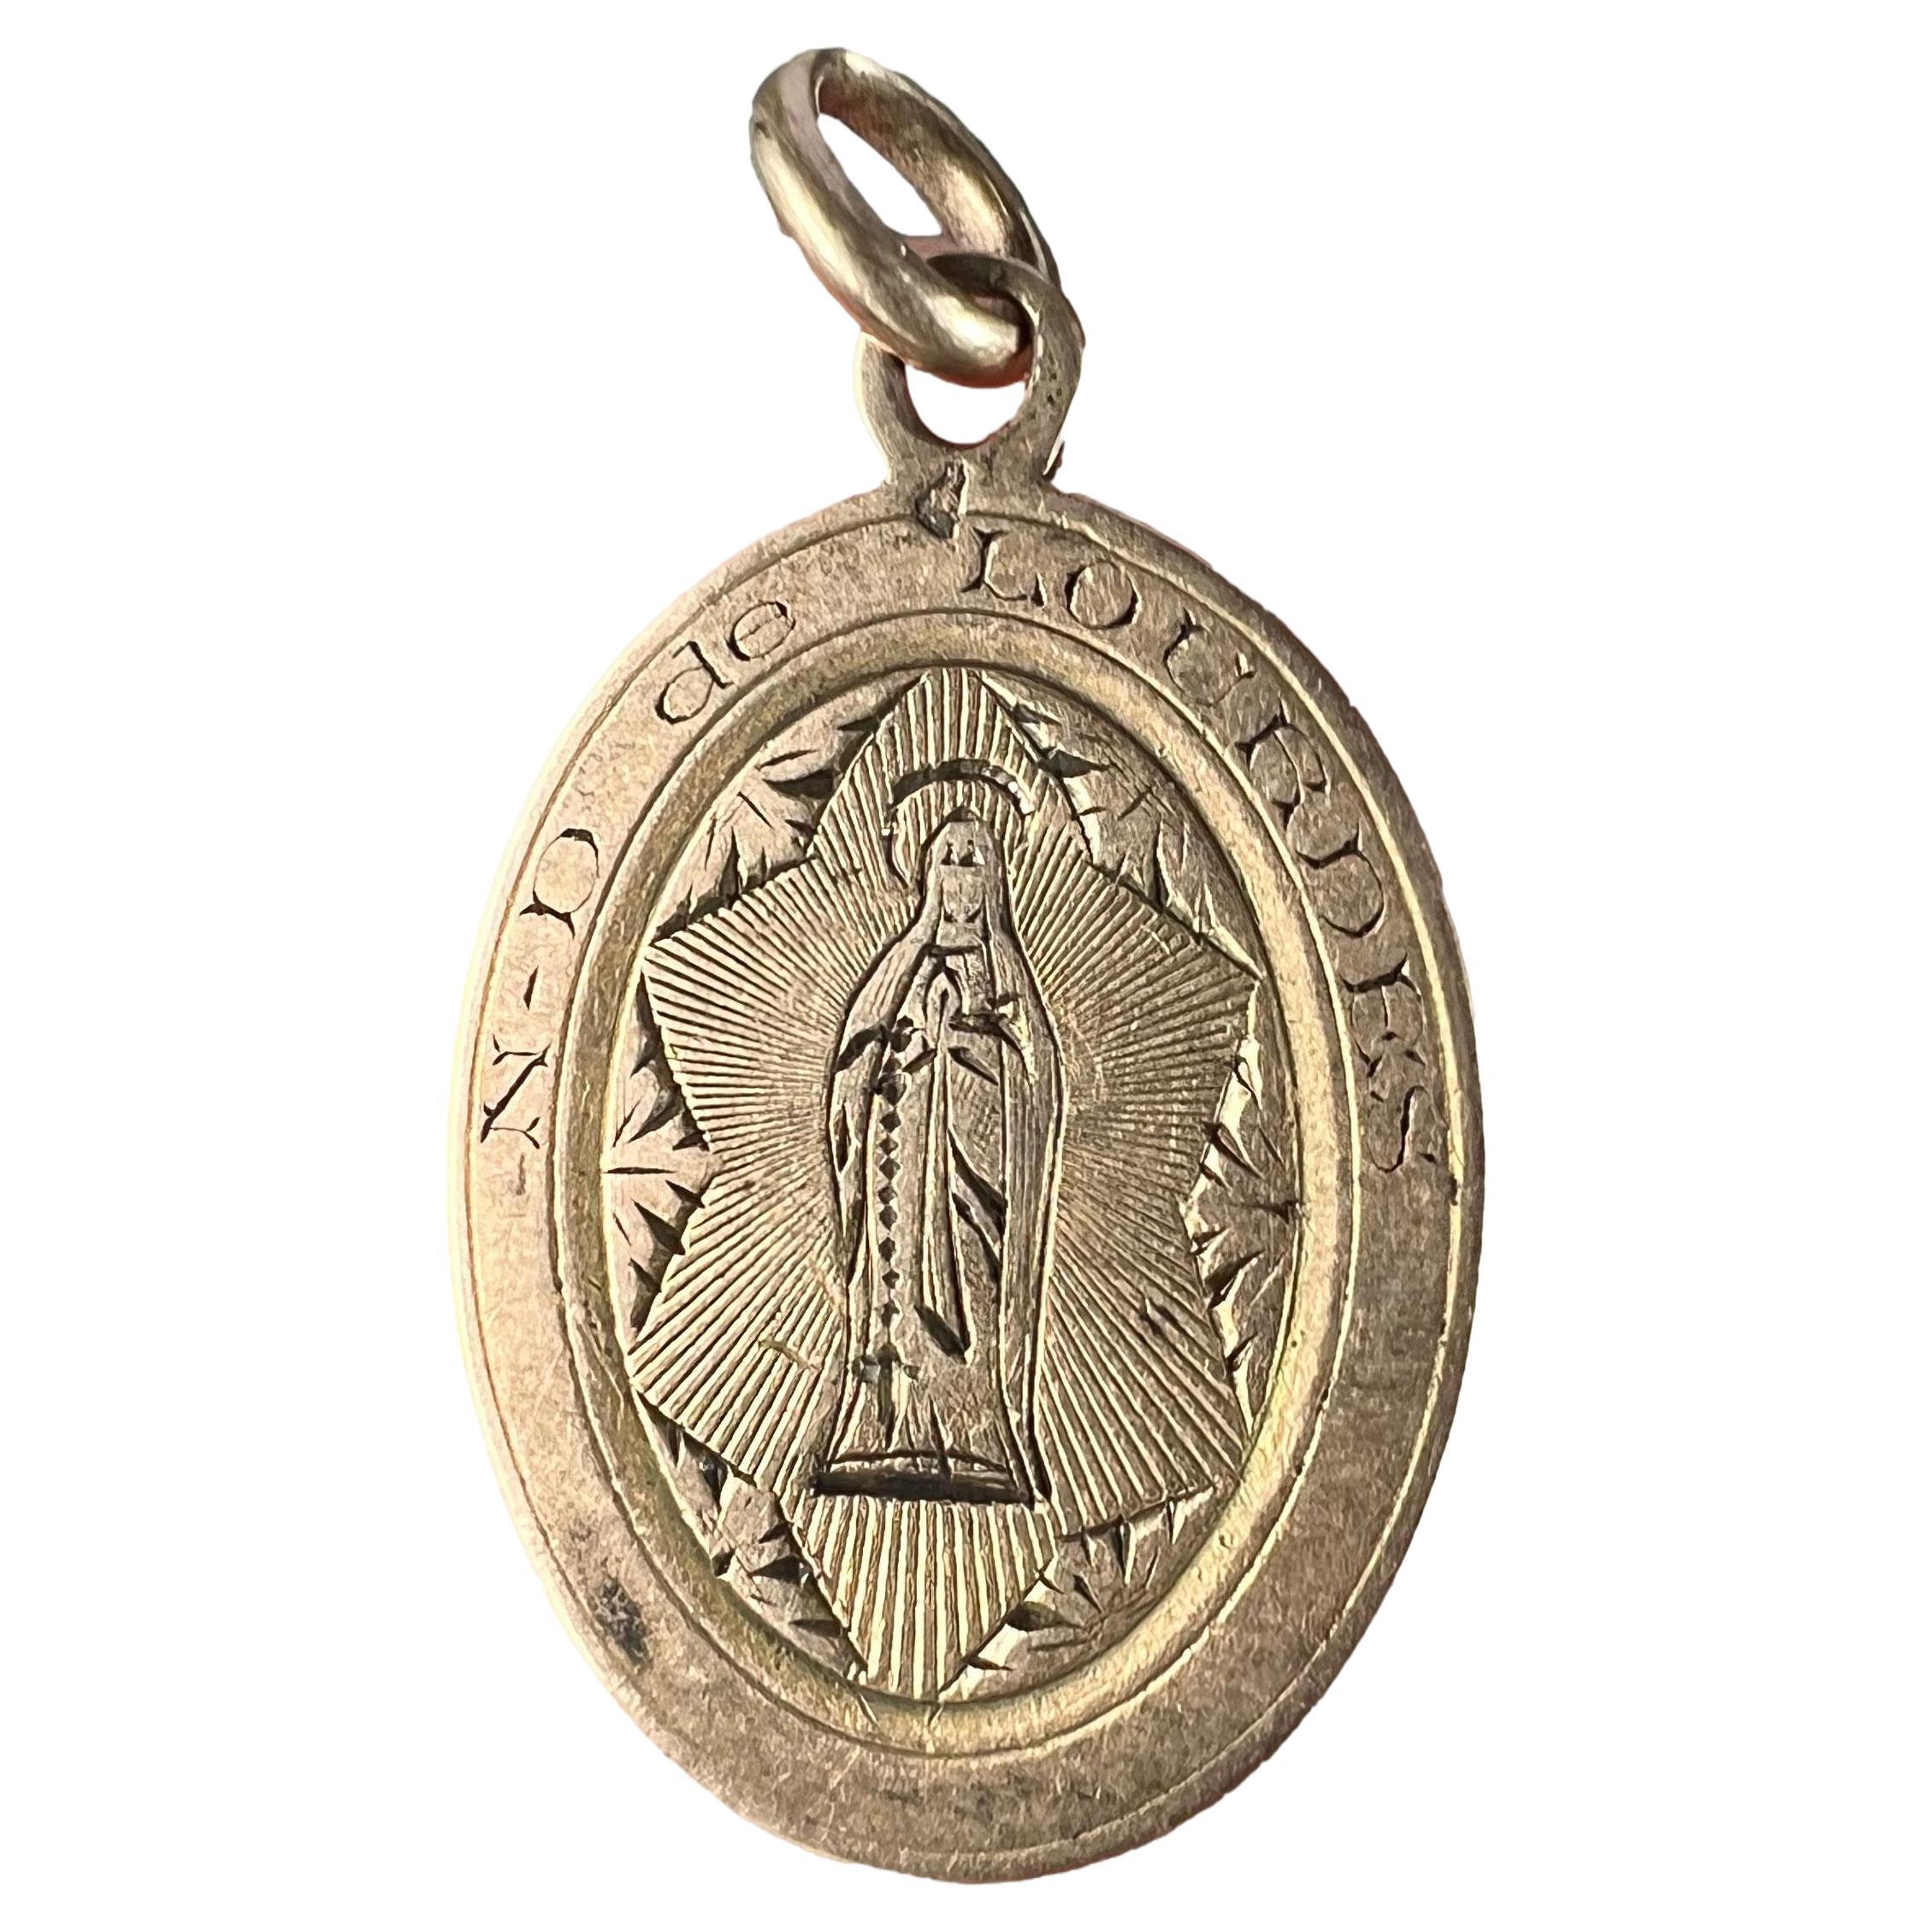 Französische Jungfrau Maria Notre Dame de Lourdes 18K Rose Gold Medal Charm Anhänger